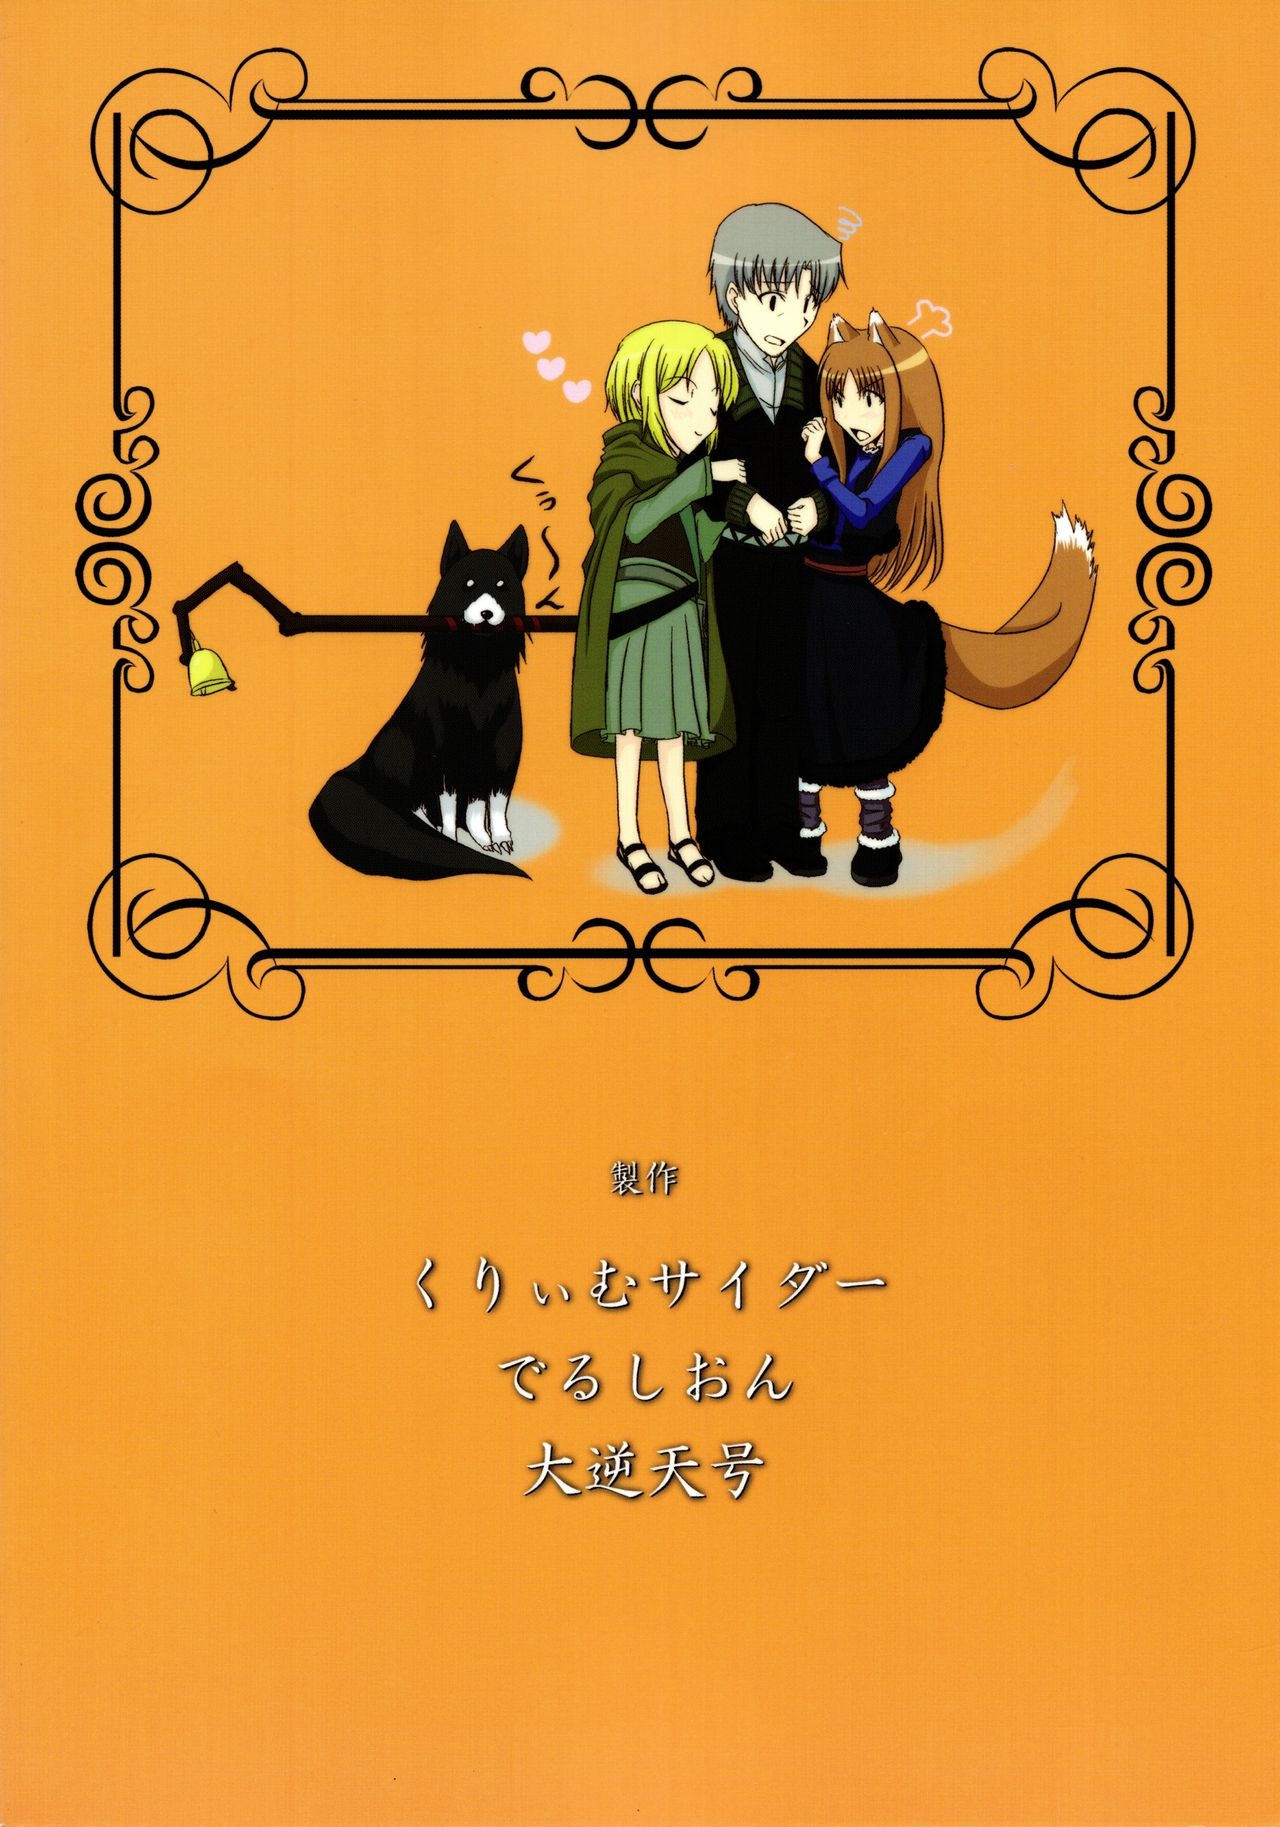 (COMIC1☆2) [Cream Cider, Taigaykuten-gou, Delusion (Karasuma Renya, L-S, Vancho)] Ookami to Ringo no Hachimitsuzuke (Spice and Wolf) 1